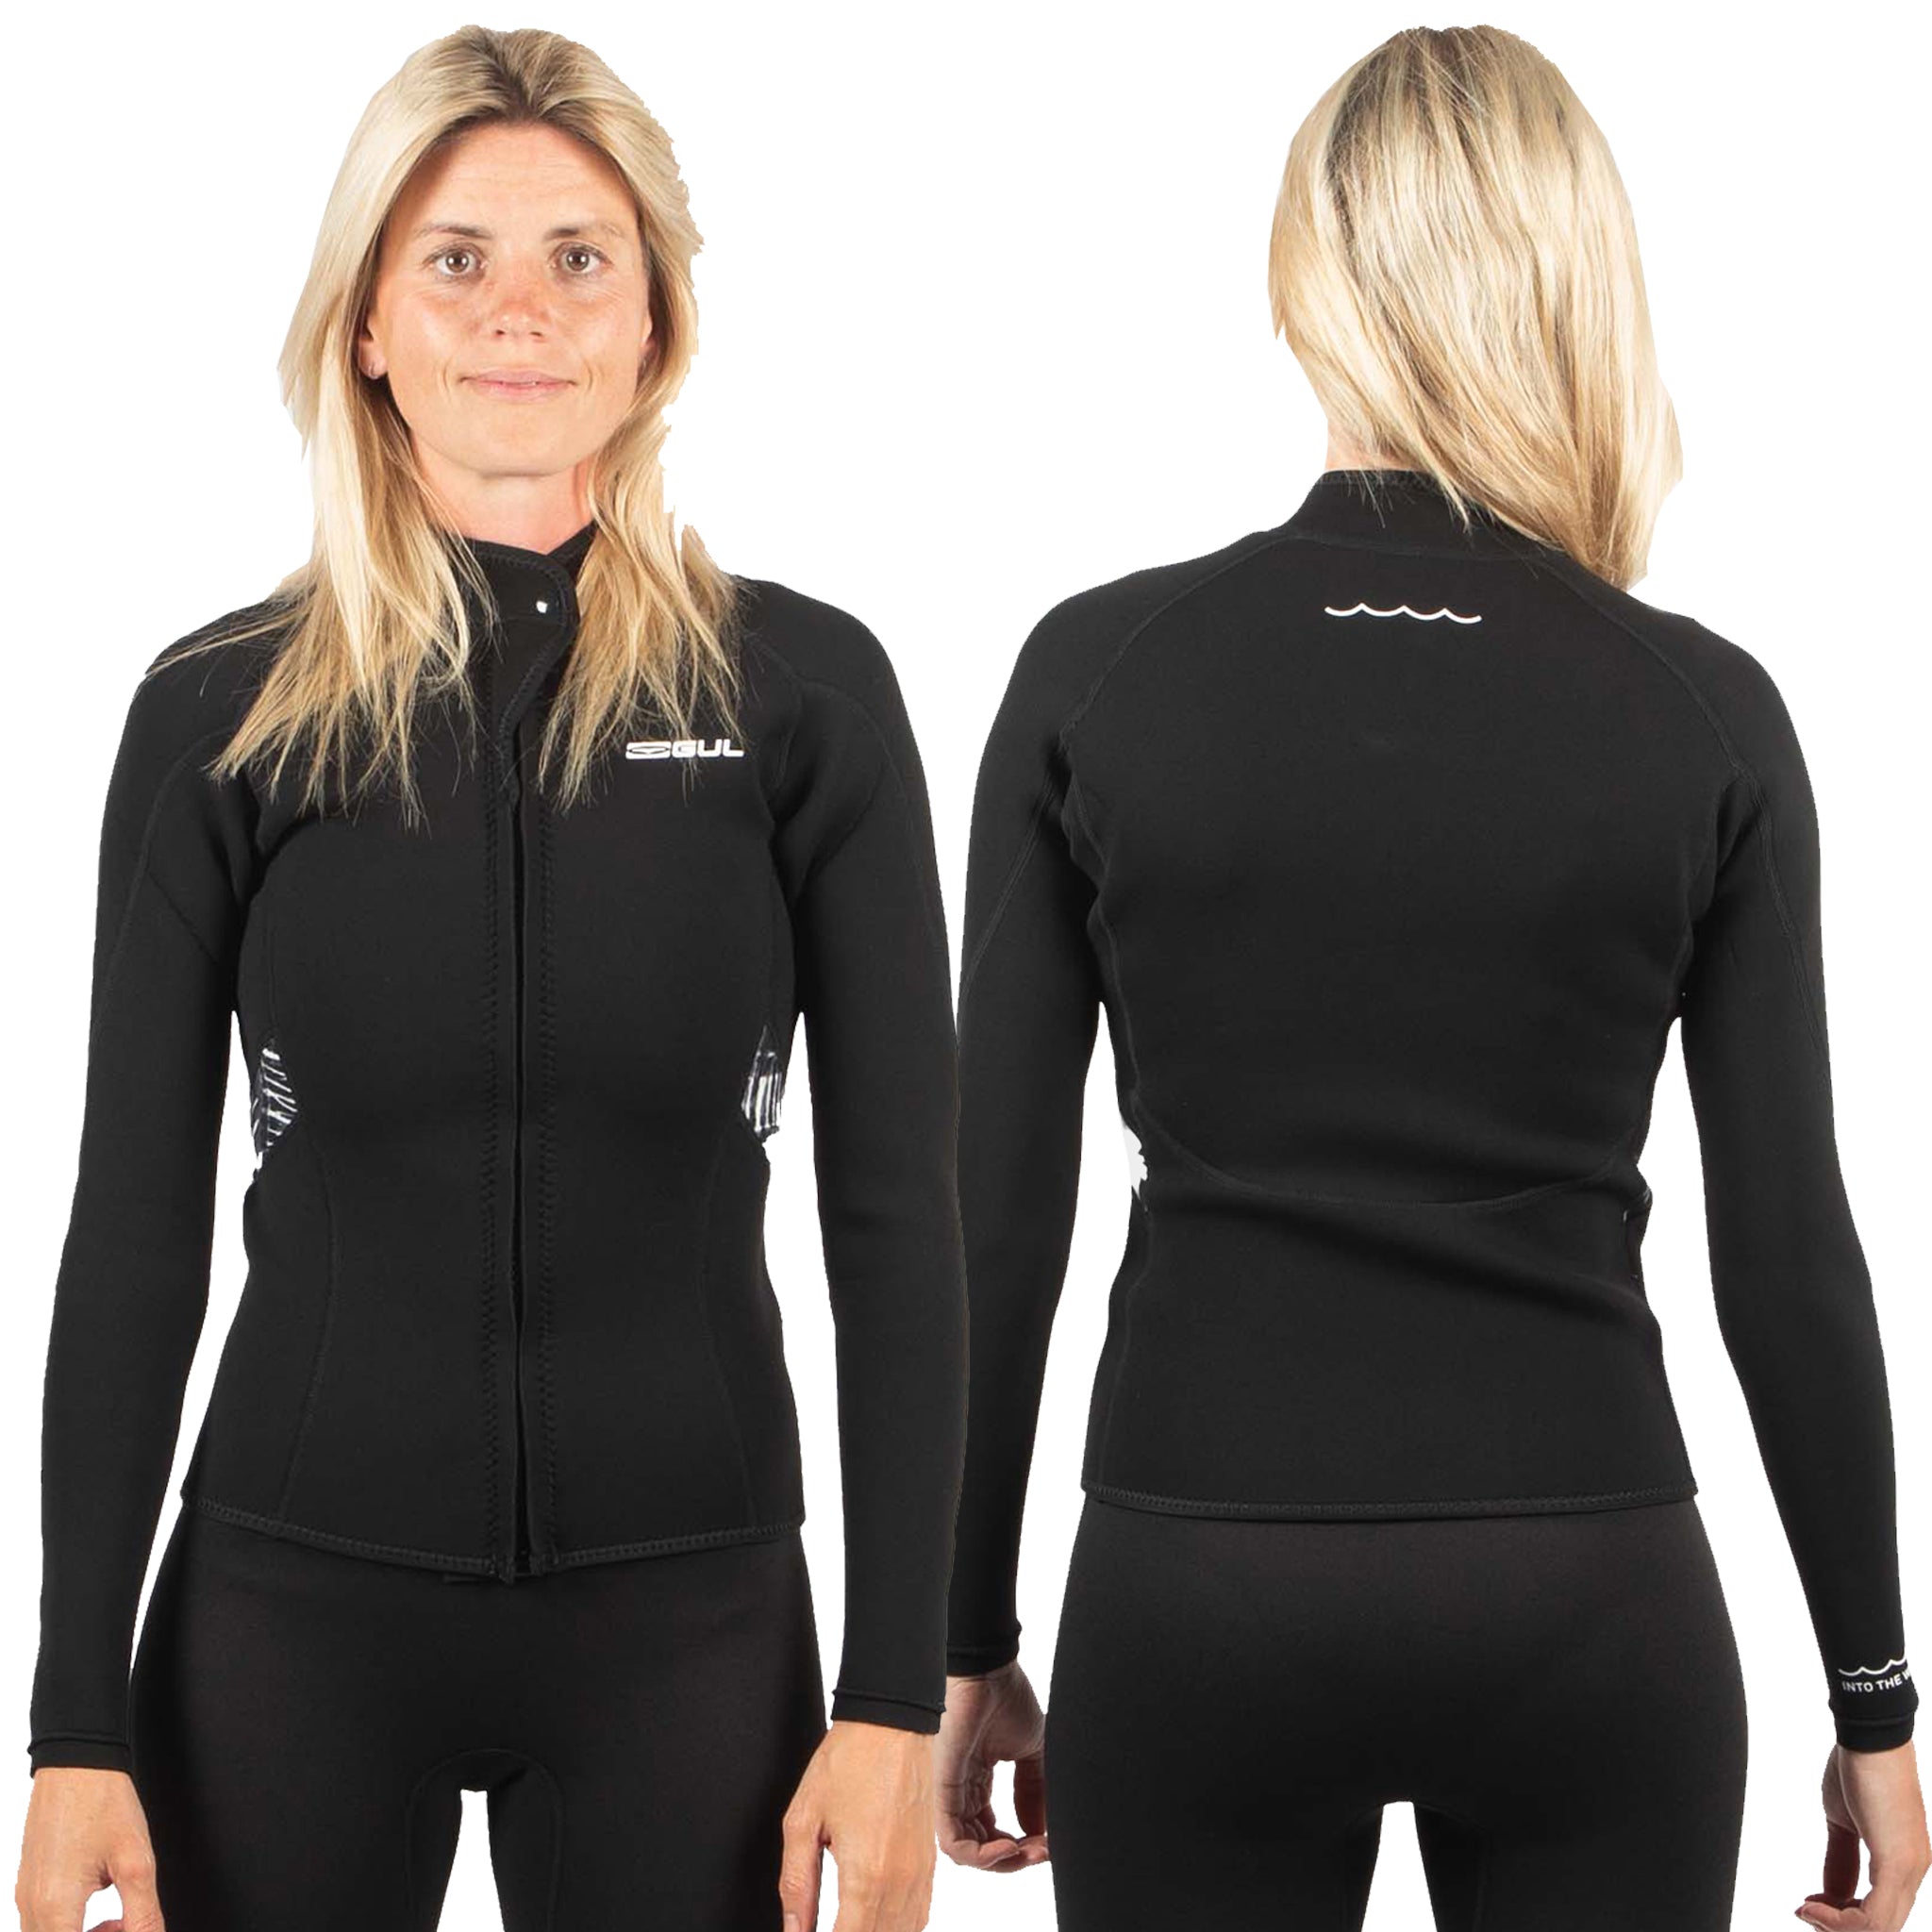 Gul Response 3/2mm Women's Wetsuit Jacket Front & Back